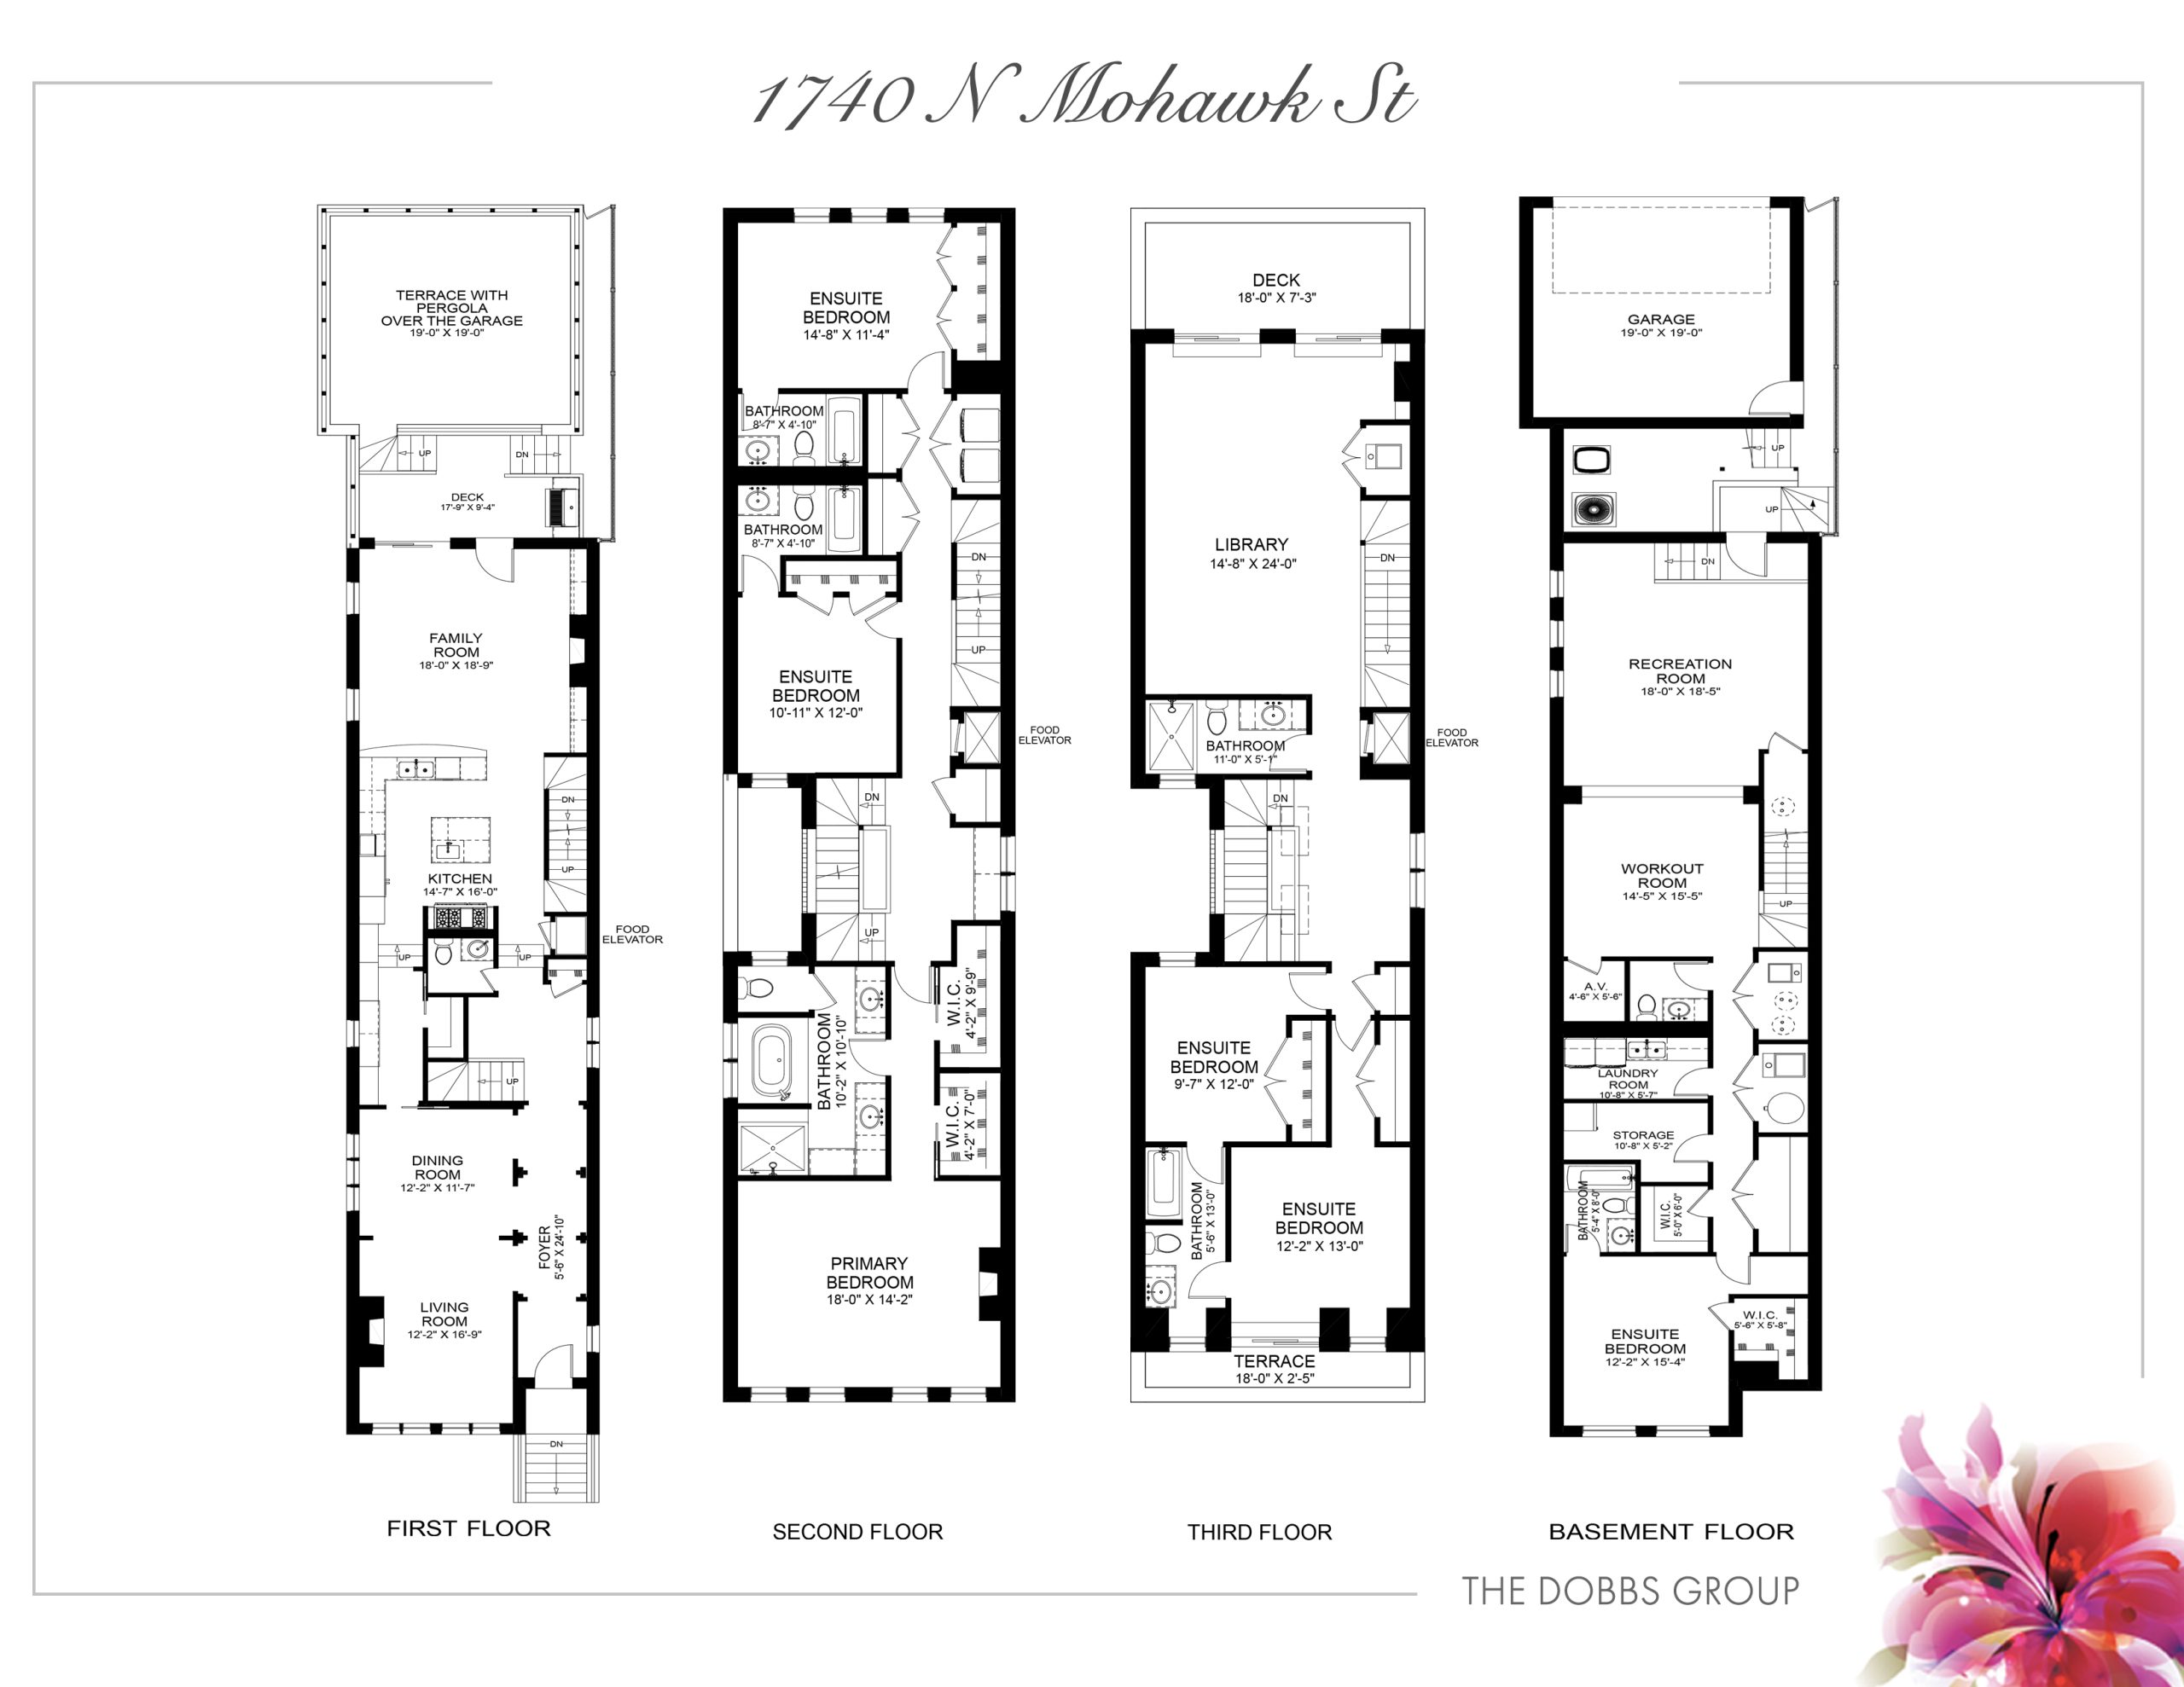 1740 N Mohawk St Chicago, IL 60614, USA
- floor plans